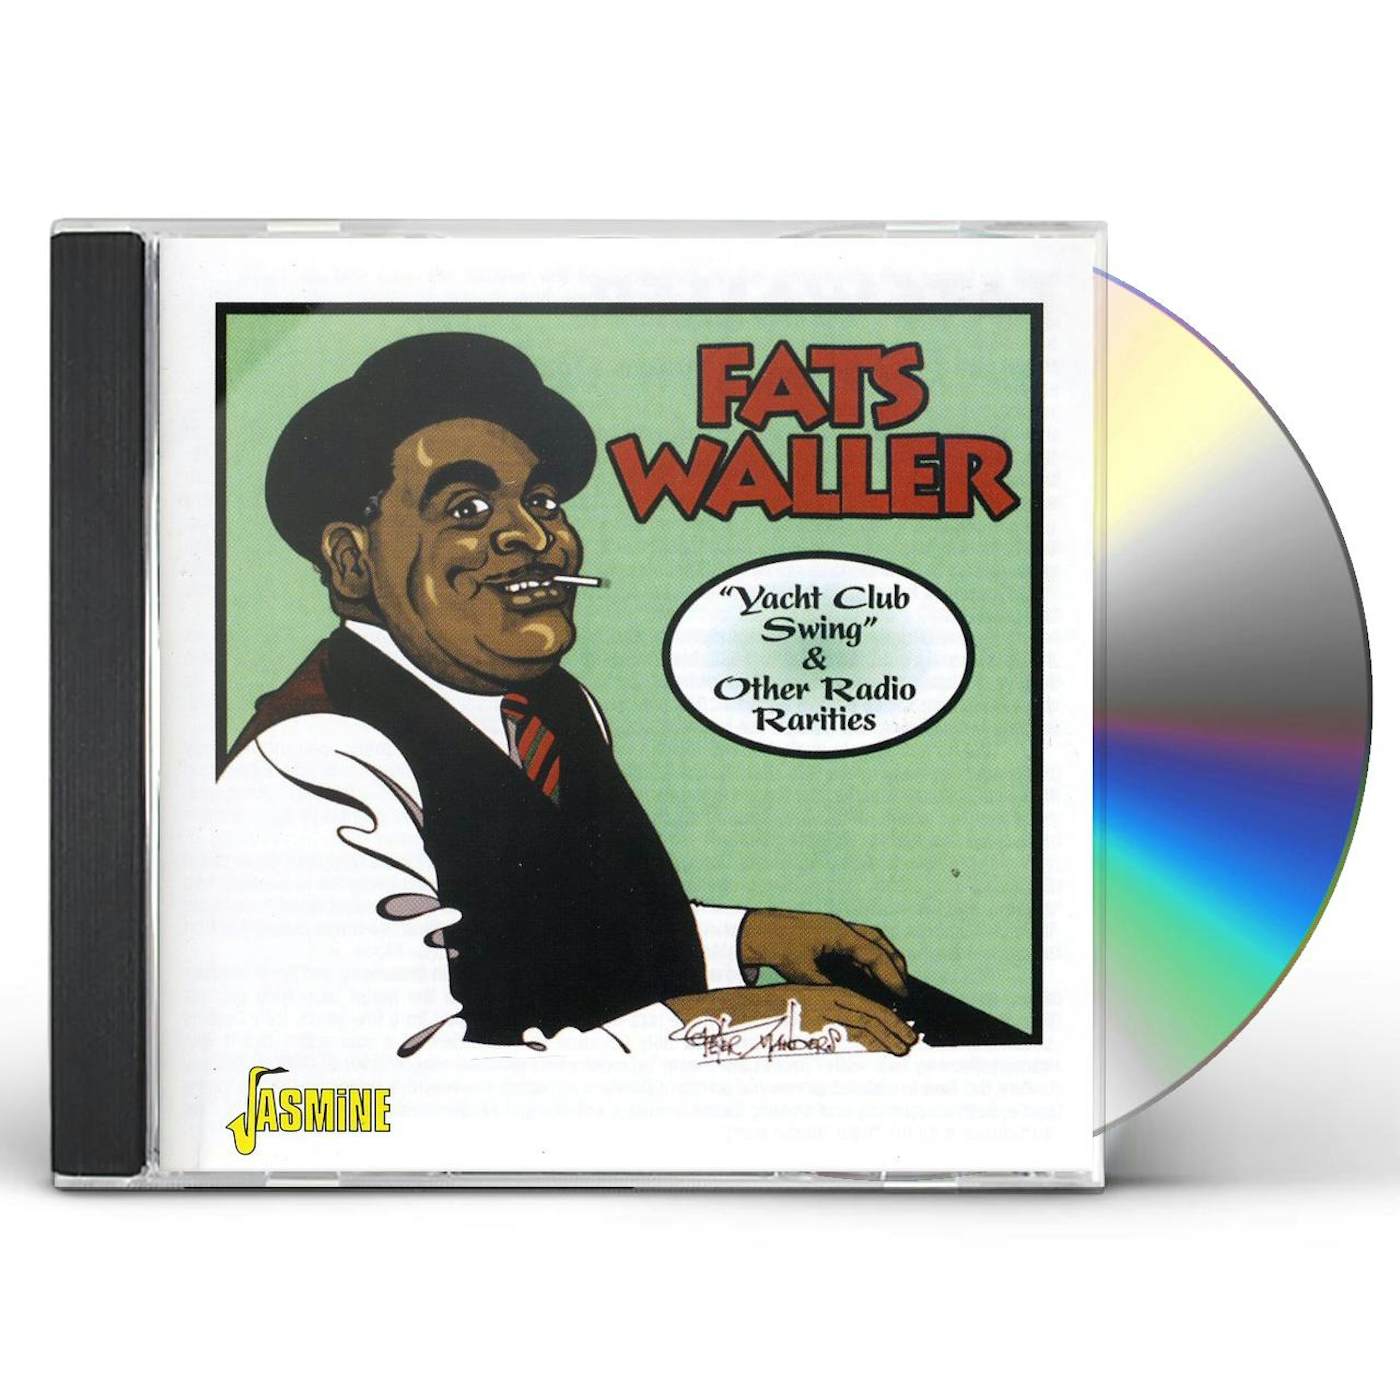 Fats Waller YACHT CLUB SWING & OTHER RADIO RARETIES CD